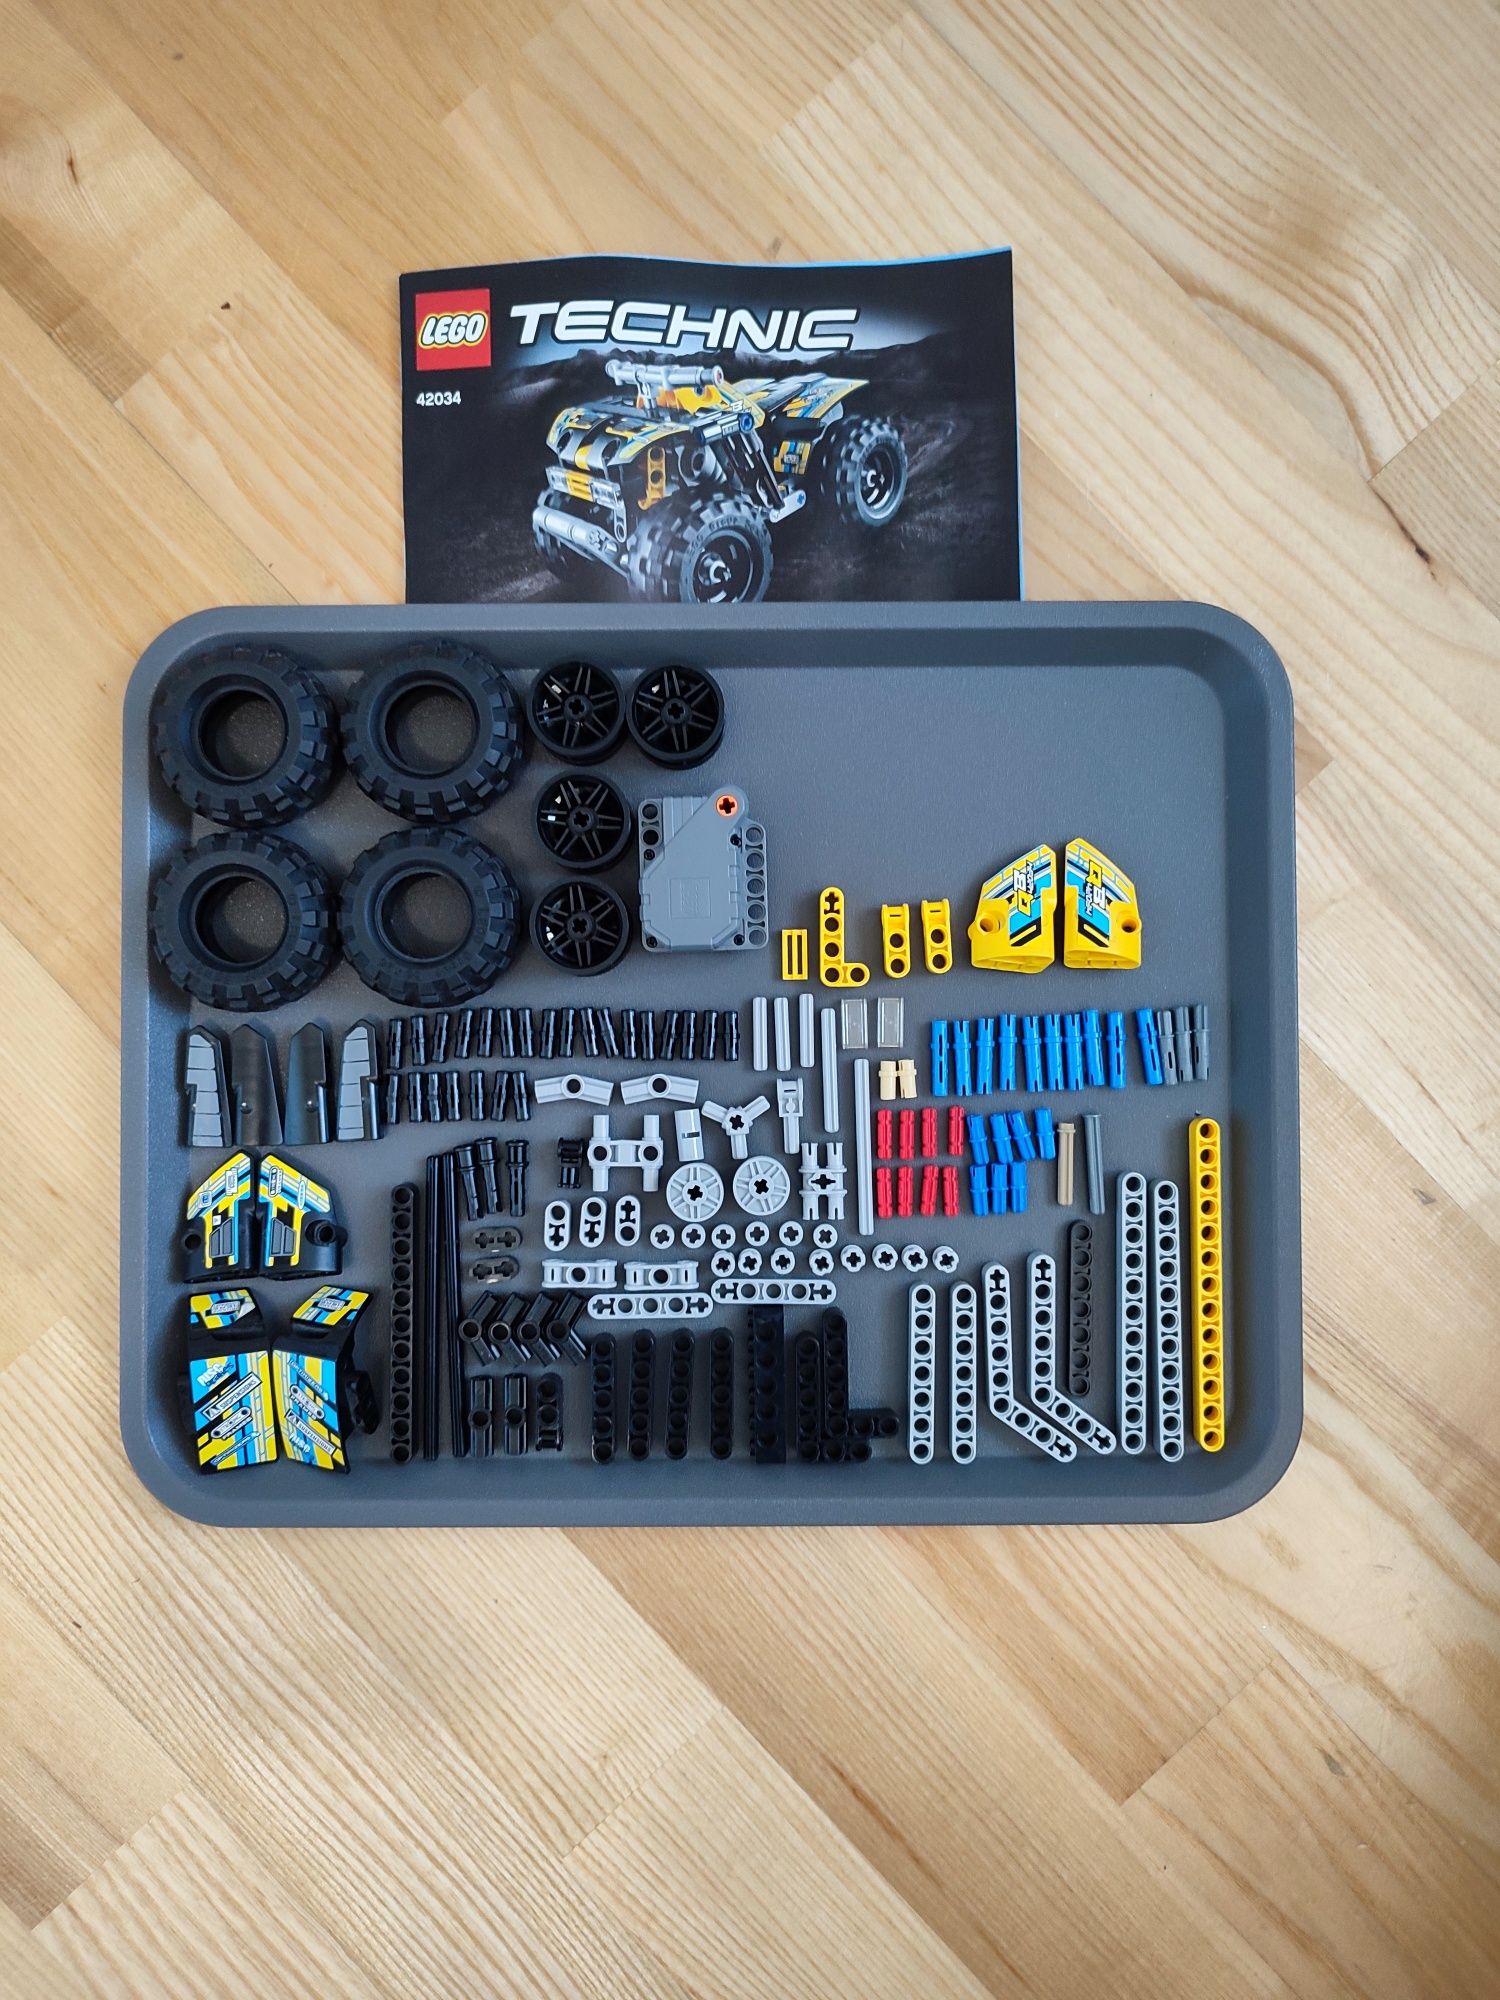 Zestaw LEGO technic 42034 Quad Pull Back